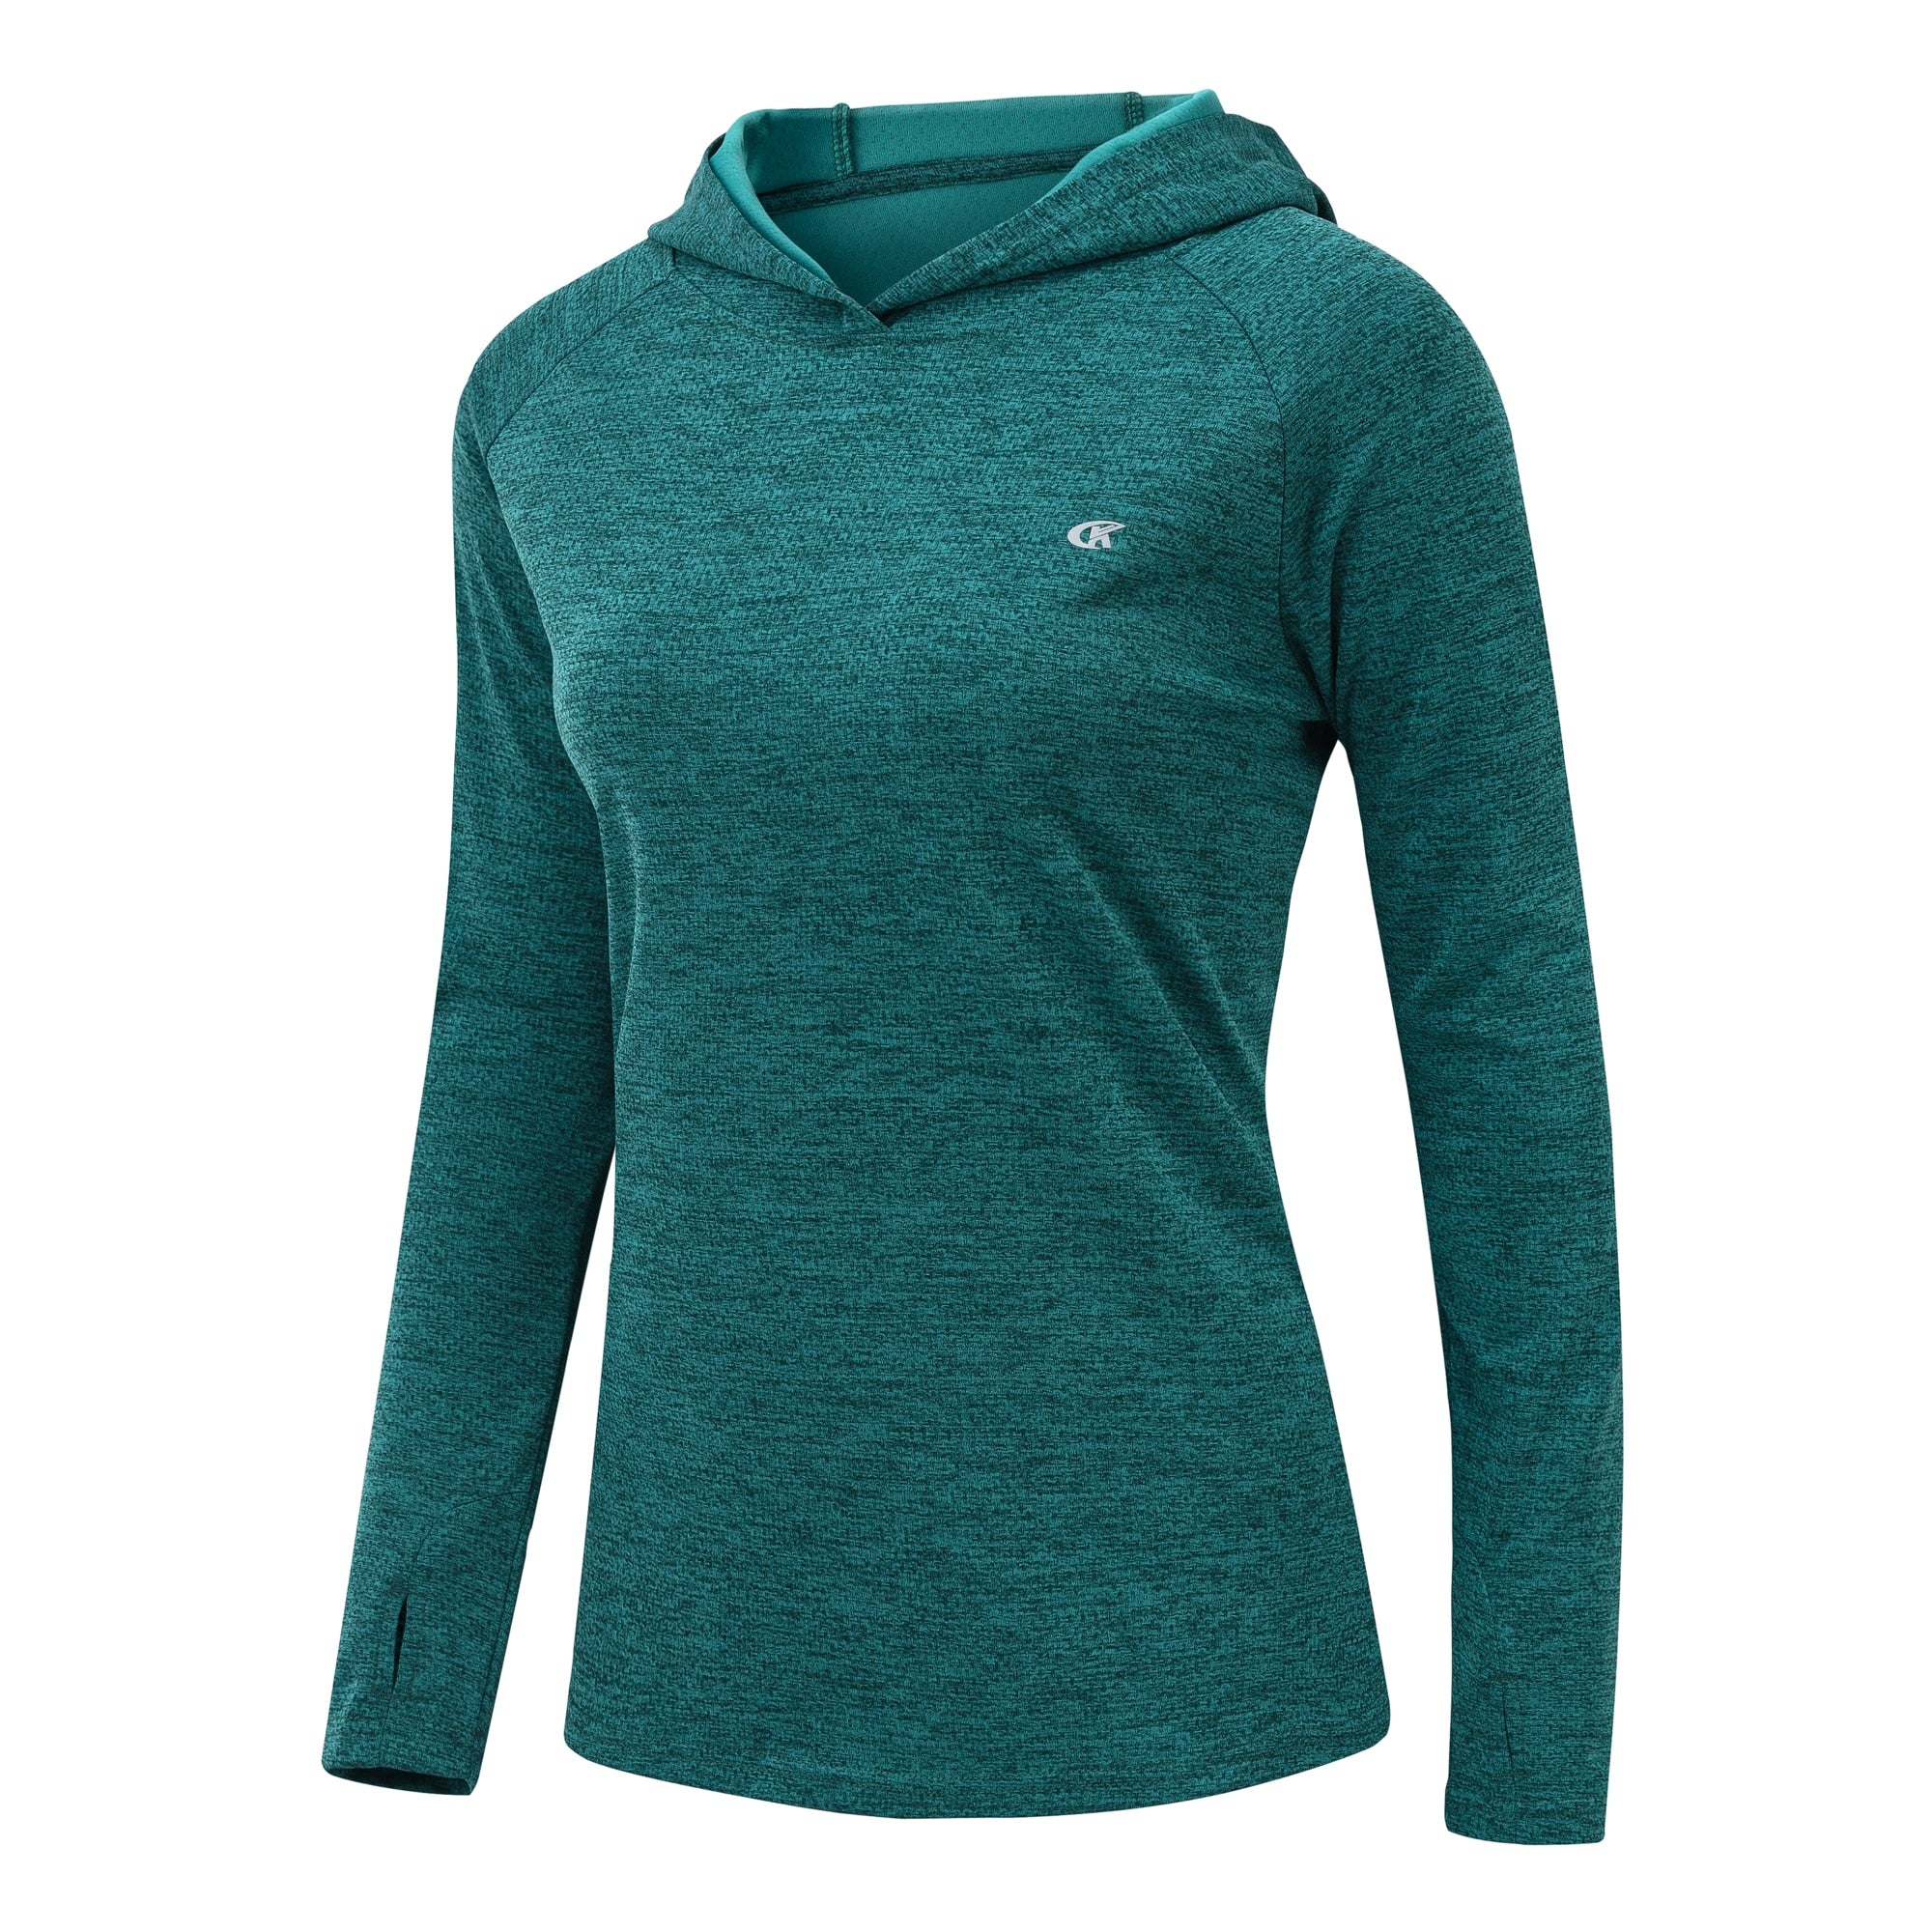 Buy blackishgreen Hiking and Running Long Sleeve T-Shirt Rash Guard UPF 50+ Quick Dry Lightweight For women